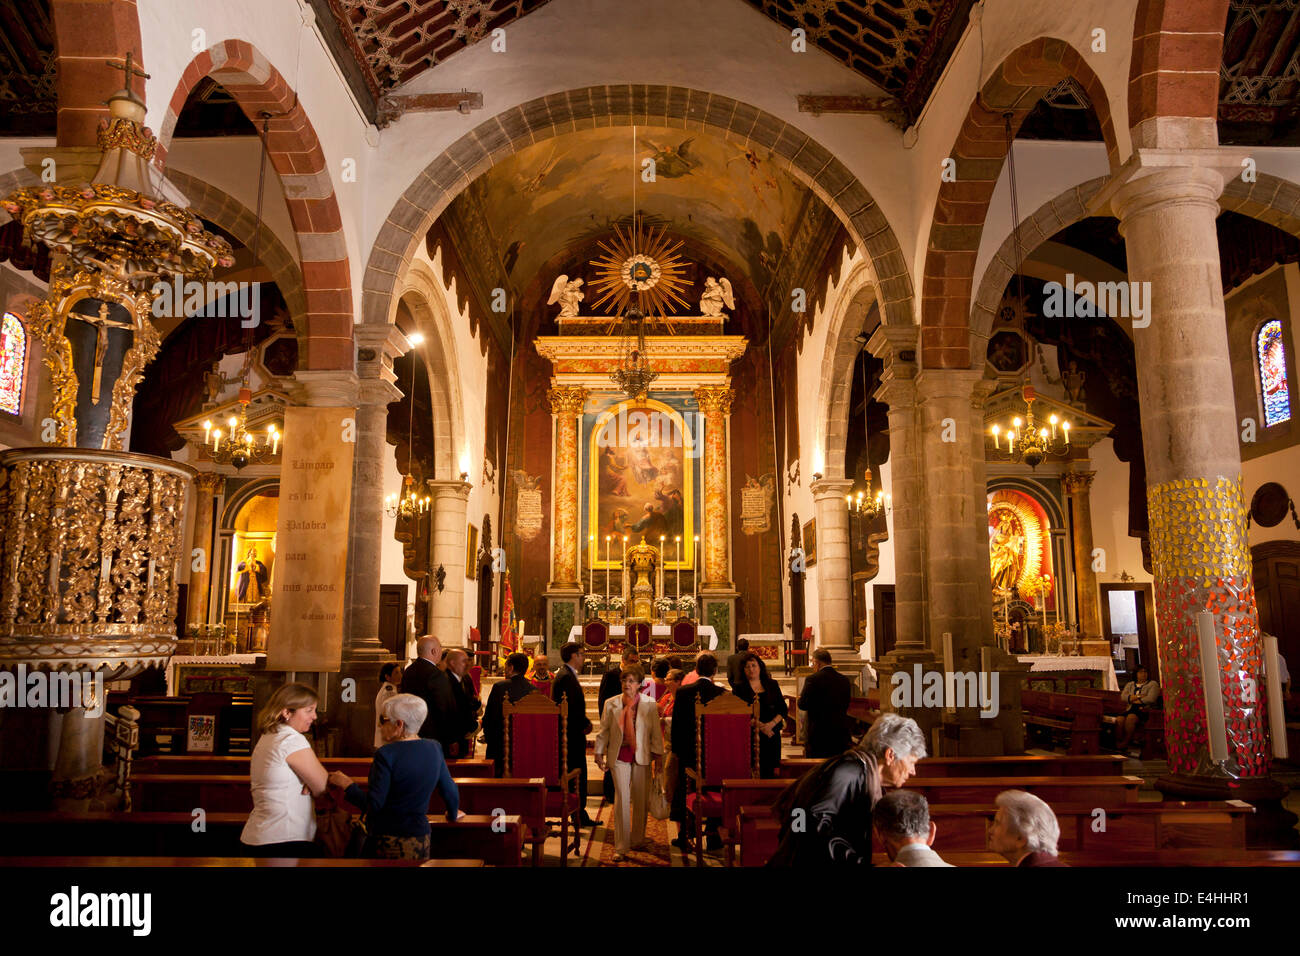 Interno della chiesa Iglesia Matriz de El Salvador a Santa Cruz de La Palma, capitale dell'isola La Palma Isole Canarie Foto Stock